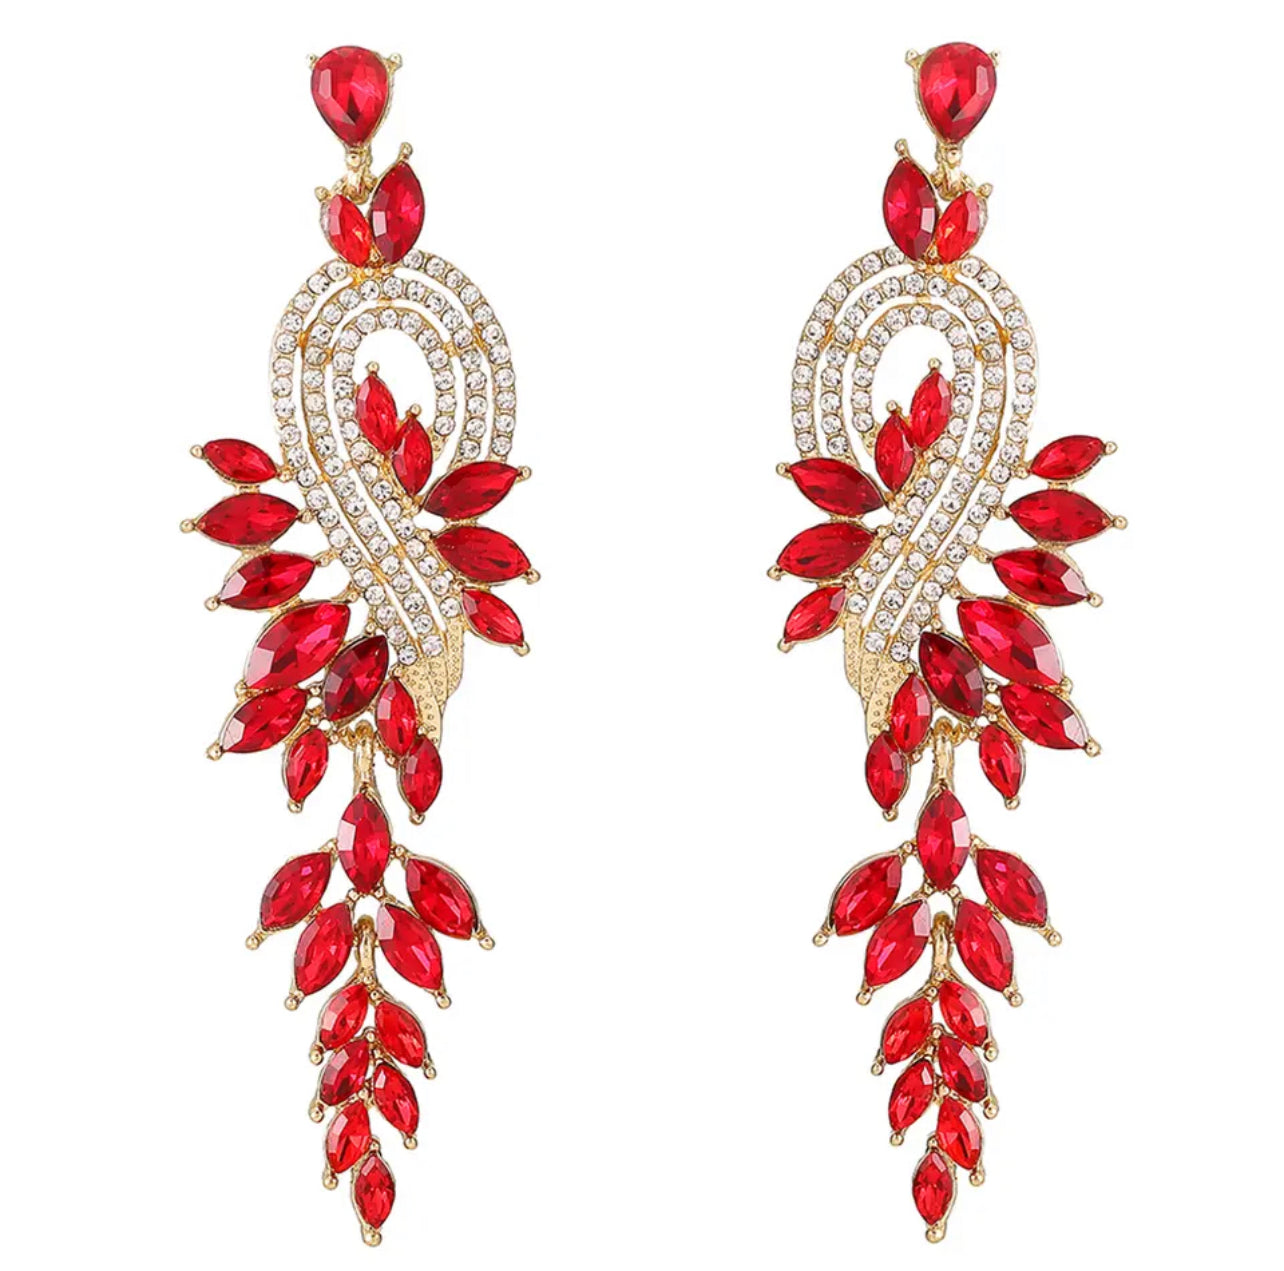 Hollywood Crystal Earrings (Red)